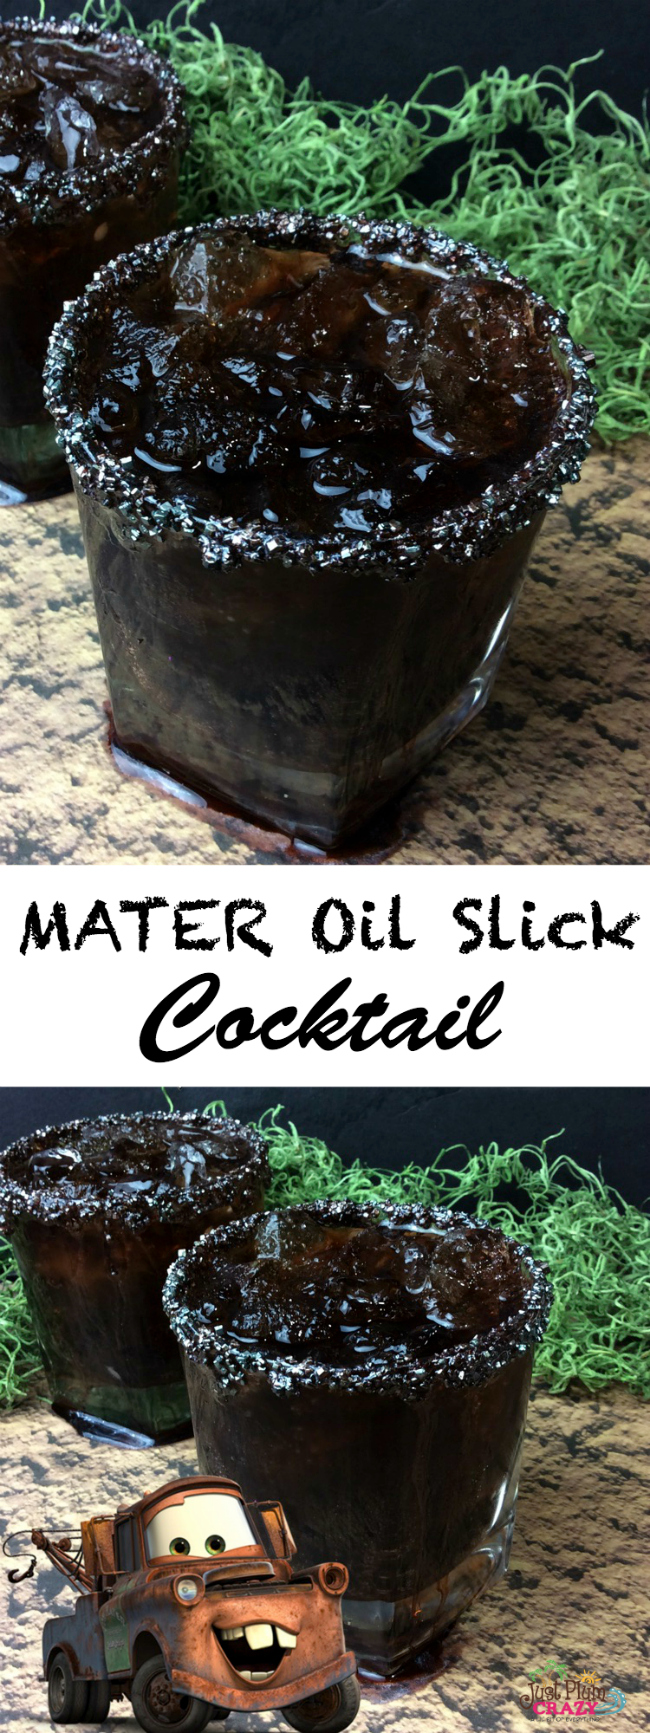 We just shared a Lightning McQueen Oreo recipe and Lightning McQueen Cupcake recipe, how about a Mater Oil Slick Cocktail recipe!